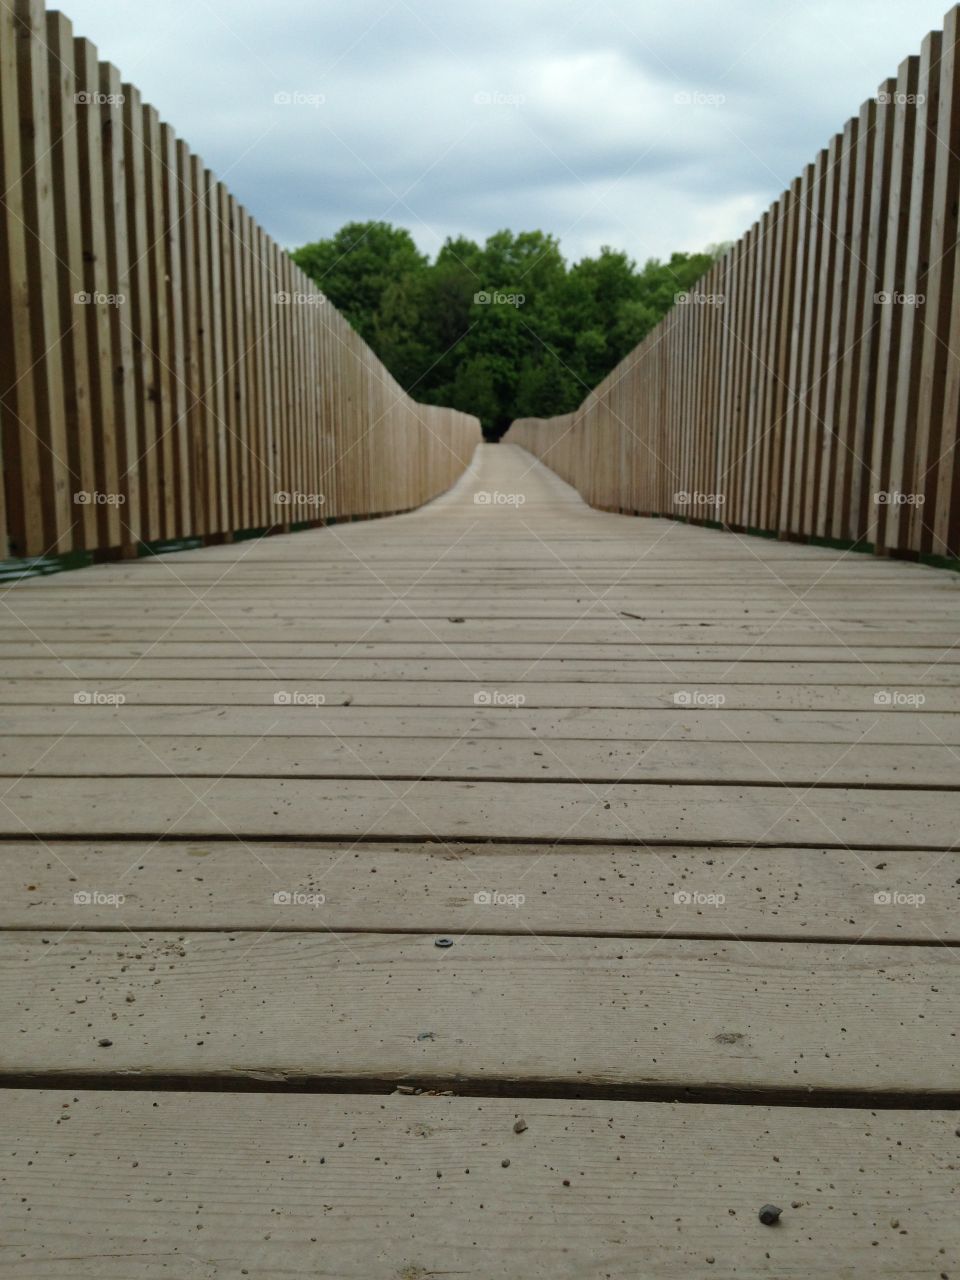 Bridge. Long wooden bridge taken from ground's eye view